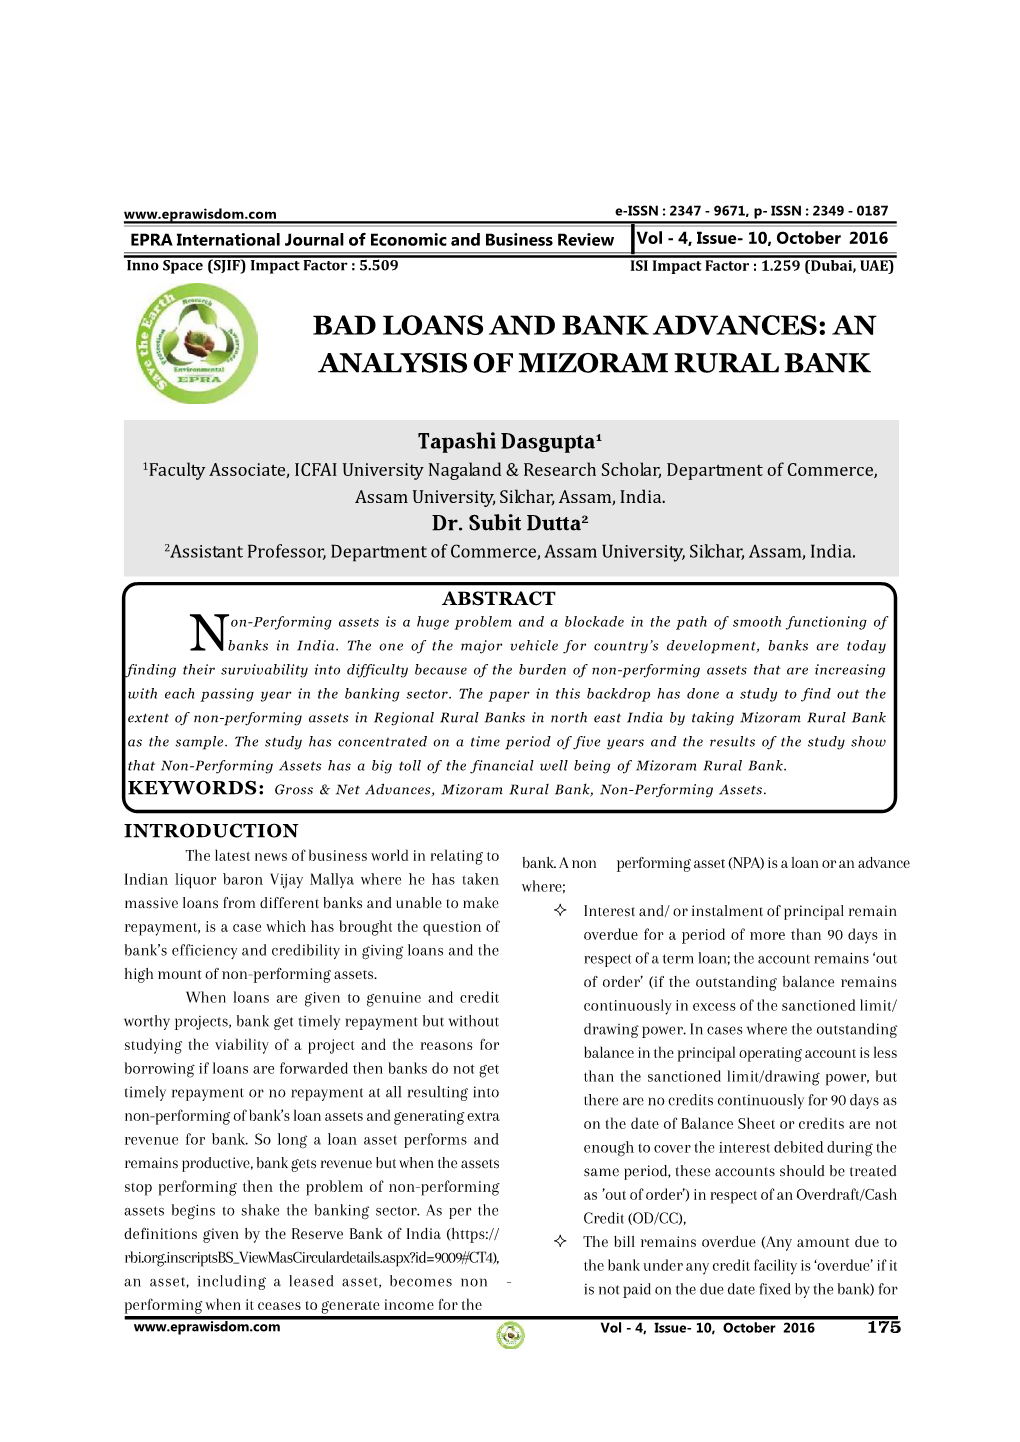 Bad Loans and Bank Advances: an Analysis of Mizoram Rural Bank